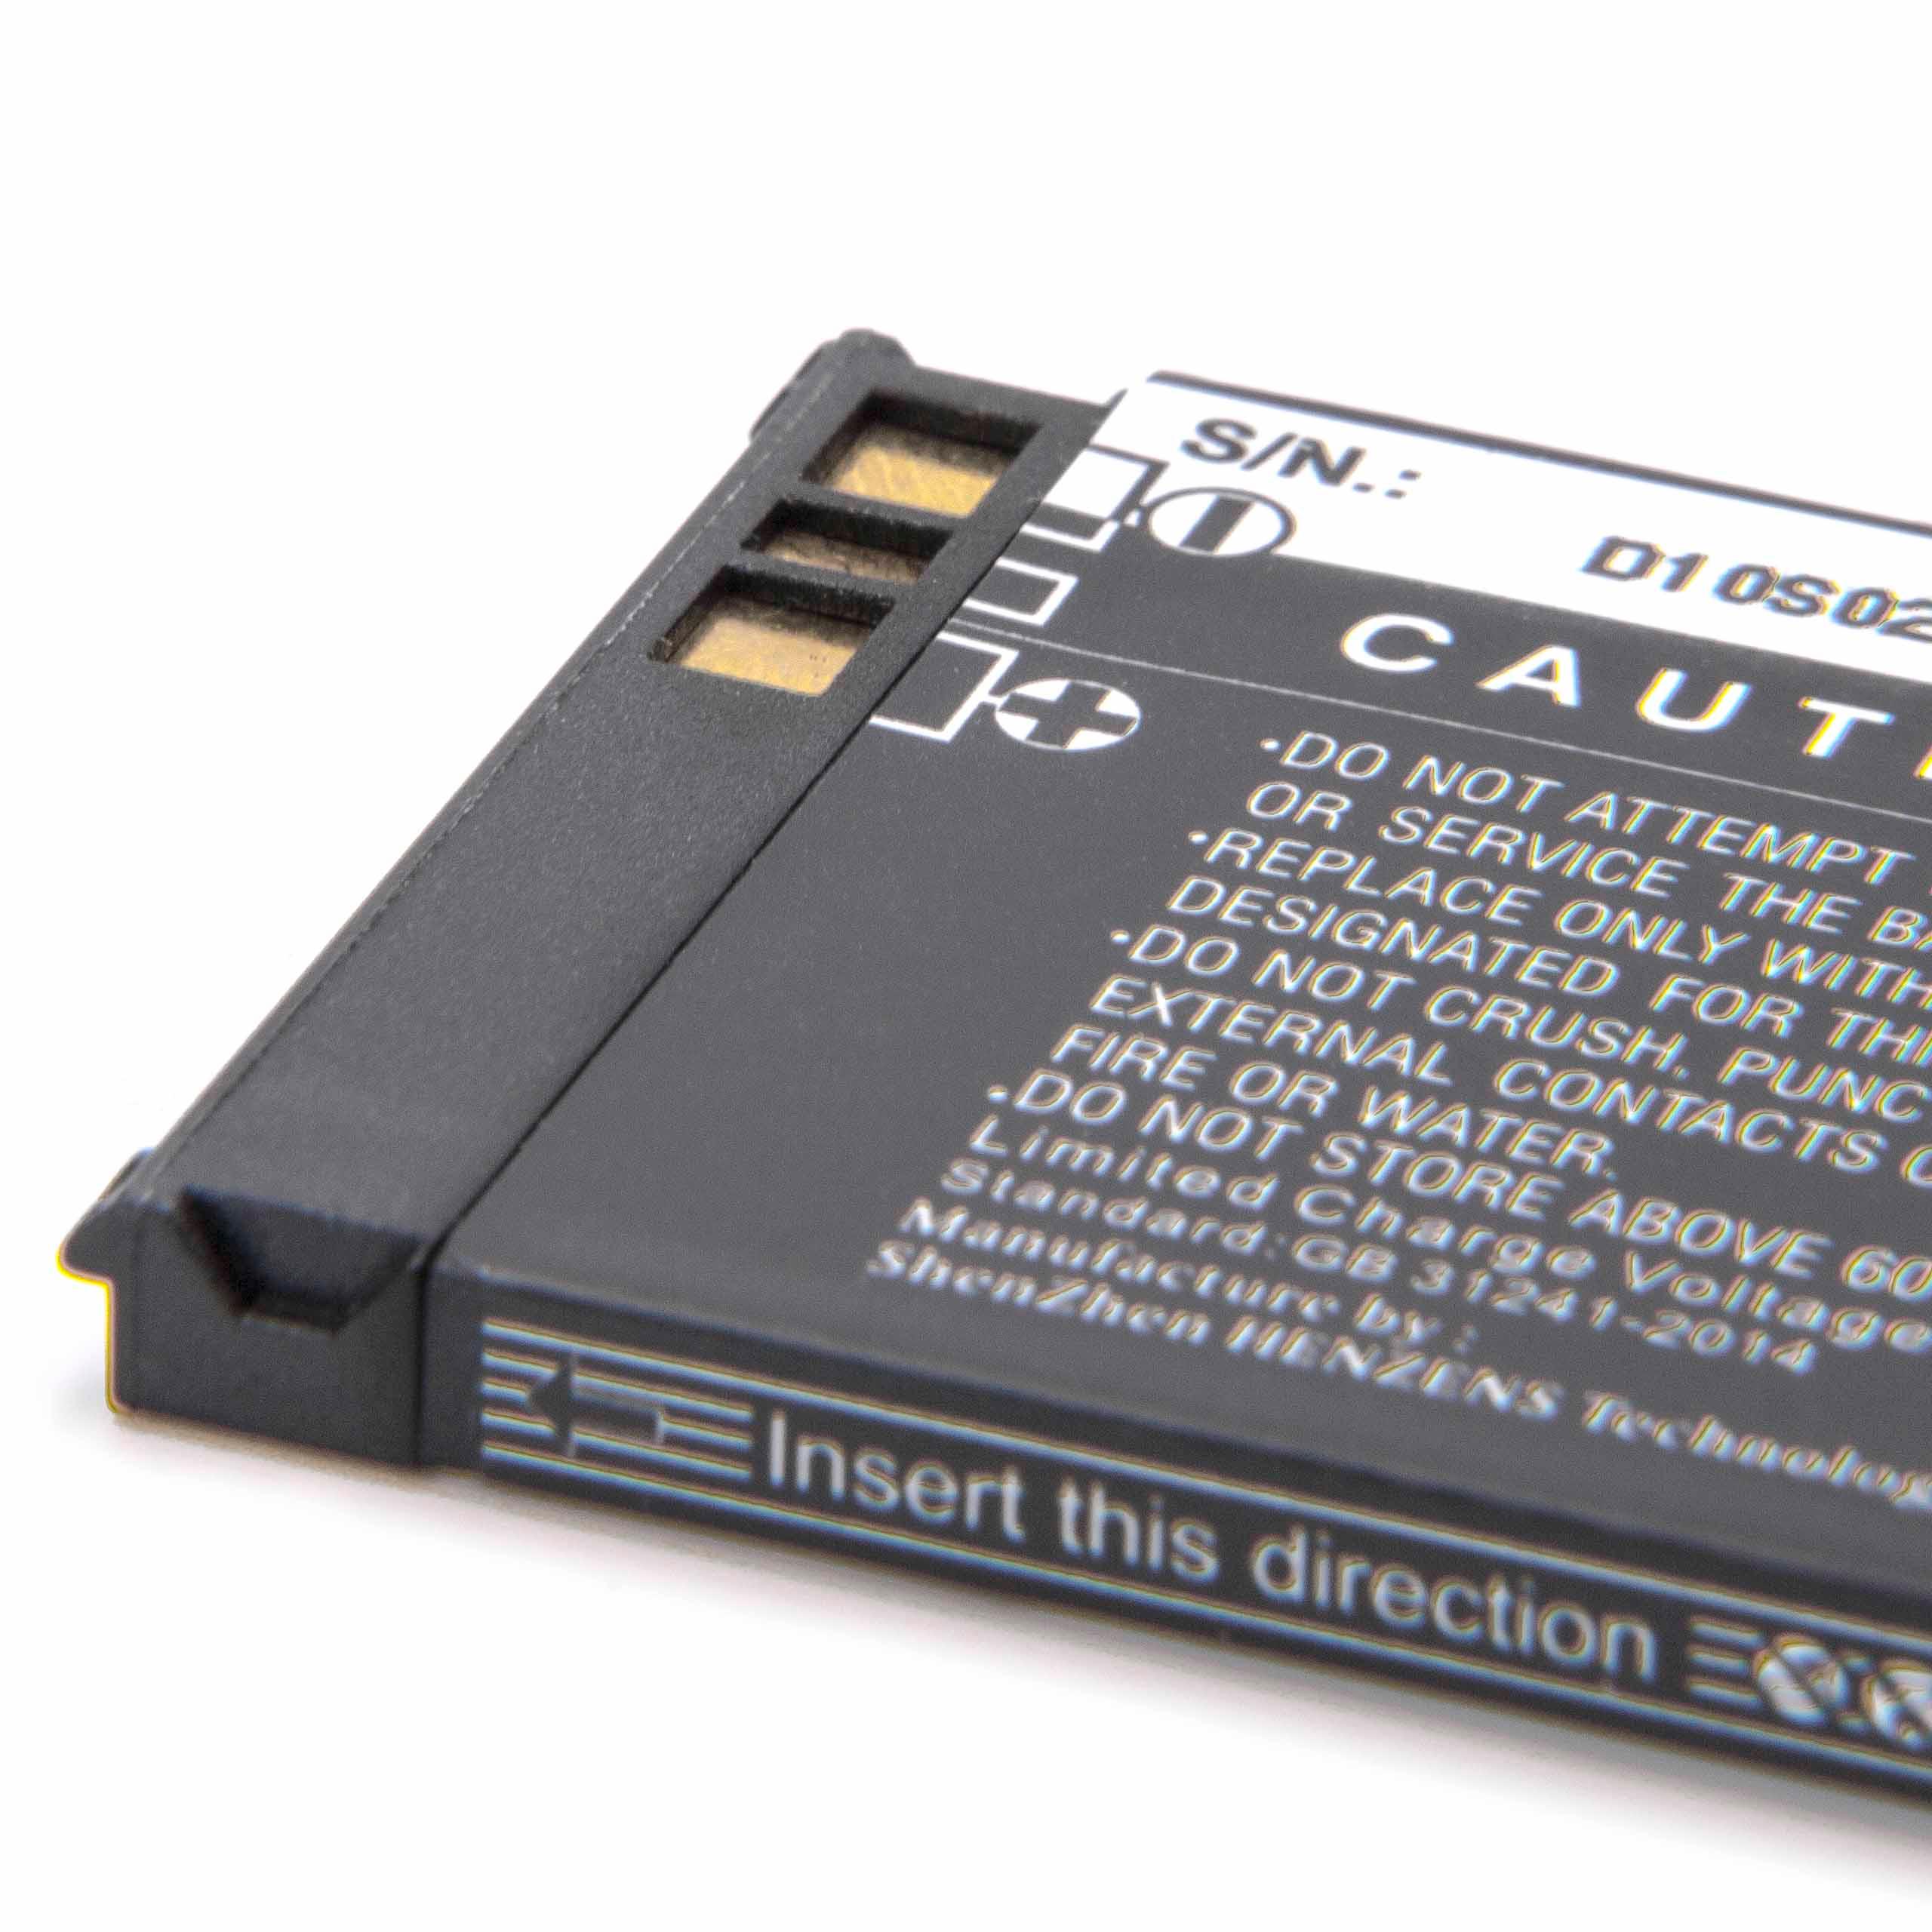 Batteria sostituisce Sharp XN-1BT30, CE-BL150 per cellulare Sharp - 950mAh 3,7V Li-Ion